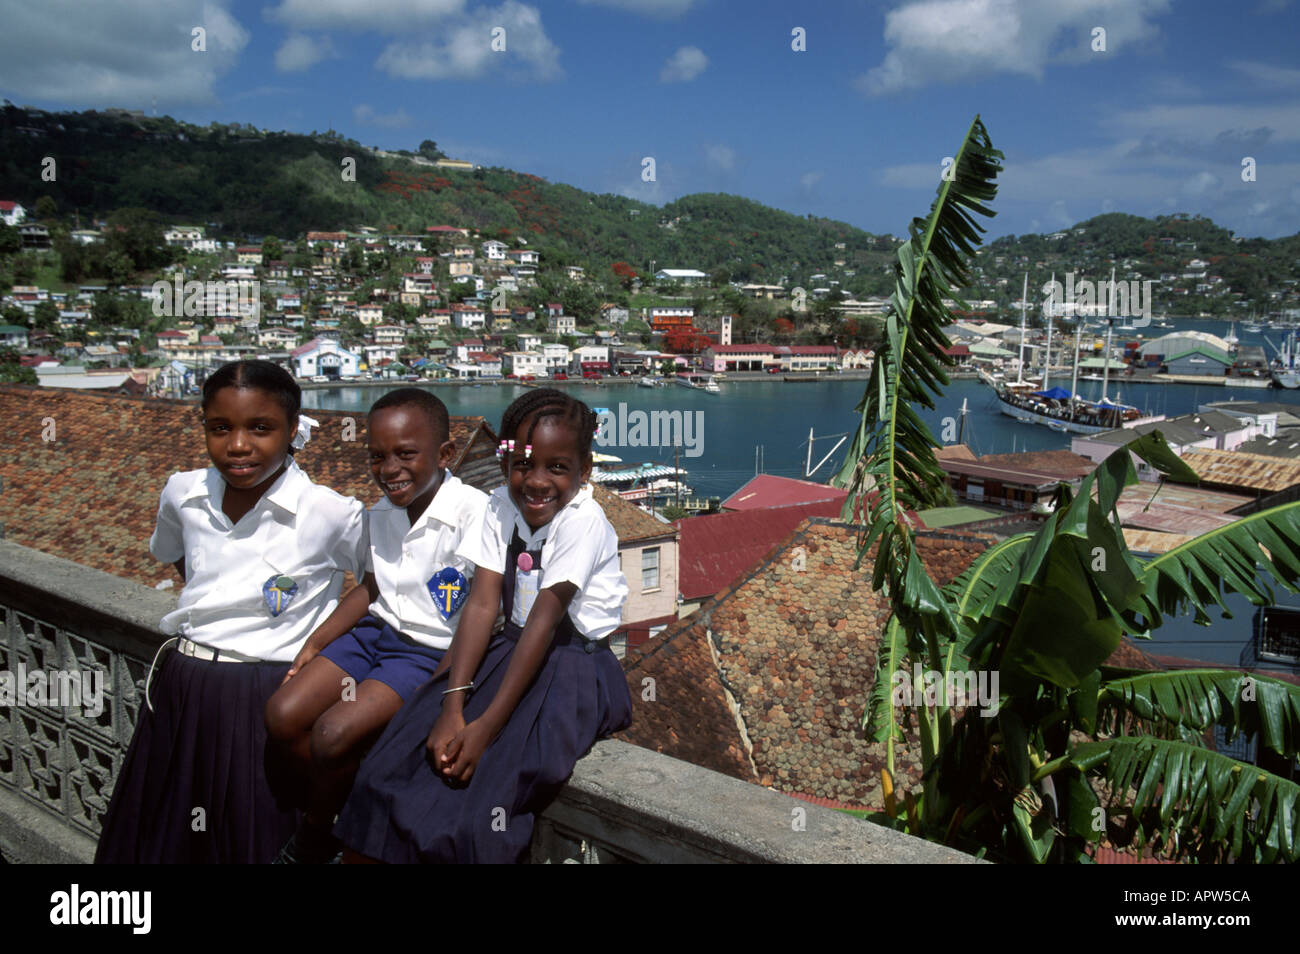 Grenada,Grenadines,West Indies,Caribbean island,Tropics,former British colony,St. George’s,St. Mary’s Catholic School student students,uniforms,Carena Stock Photo